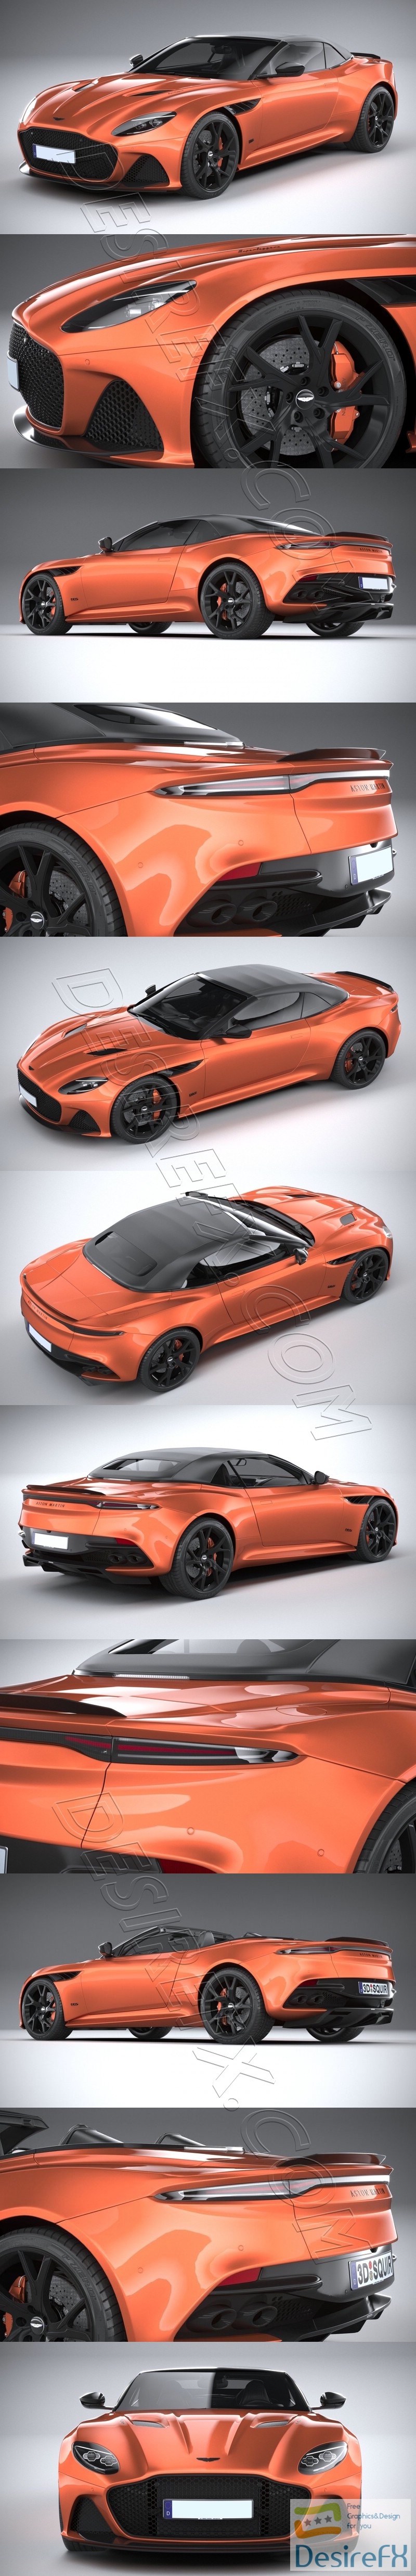 Aston Martin DBS Superleggera Volante 2020 3D Model